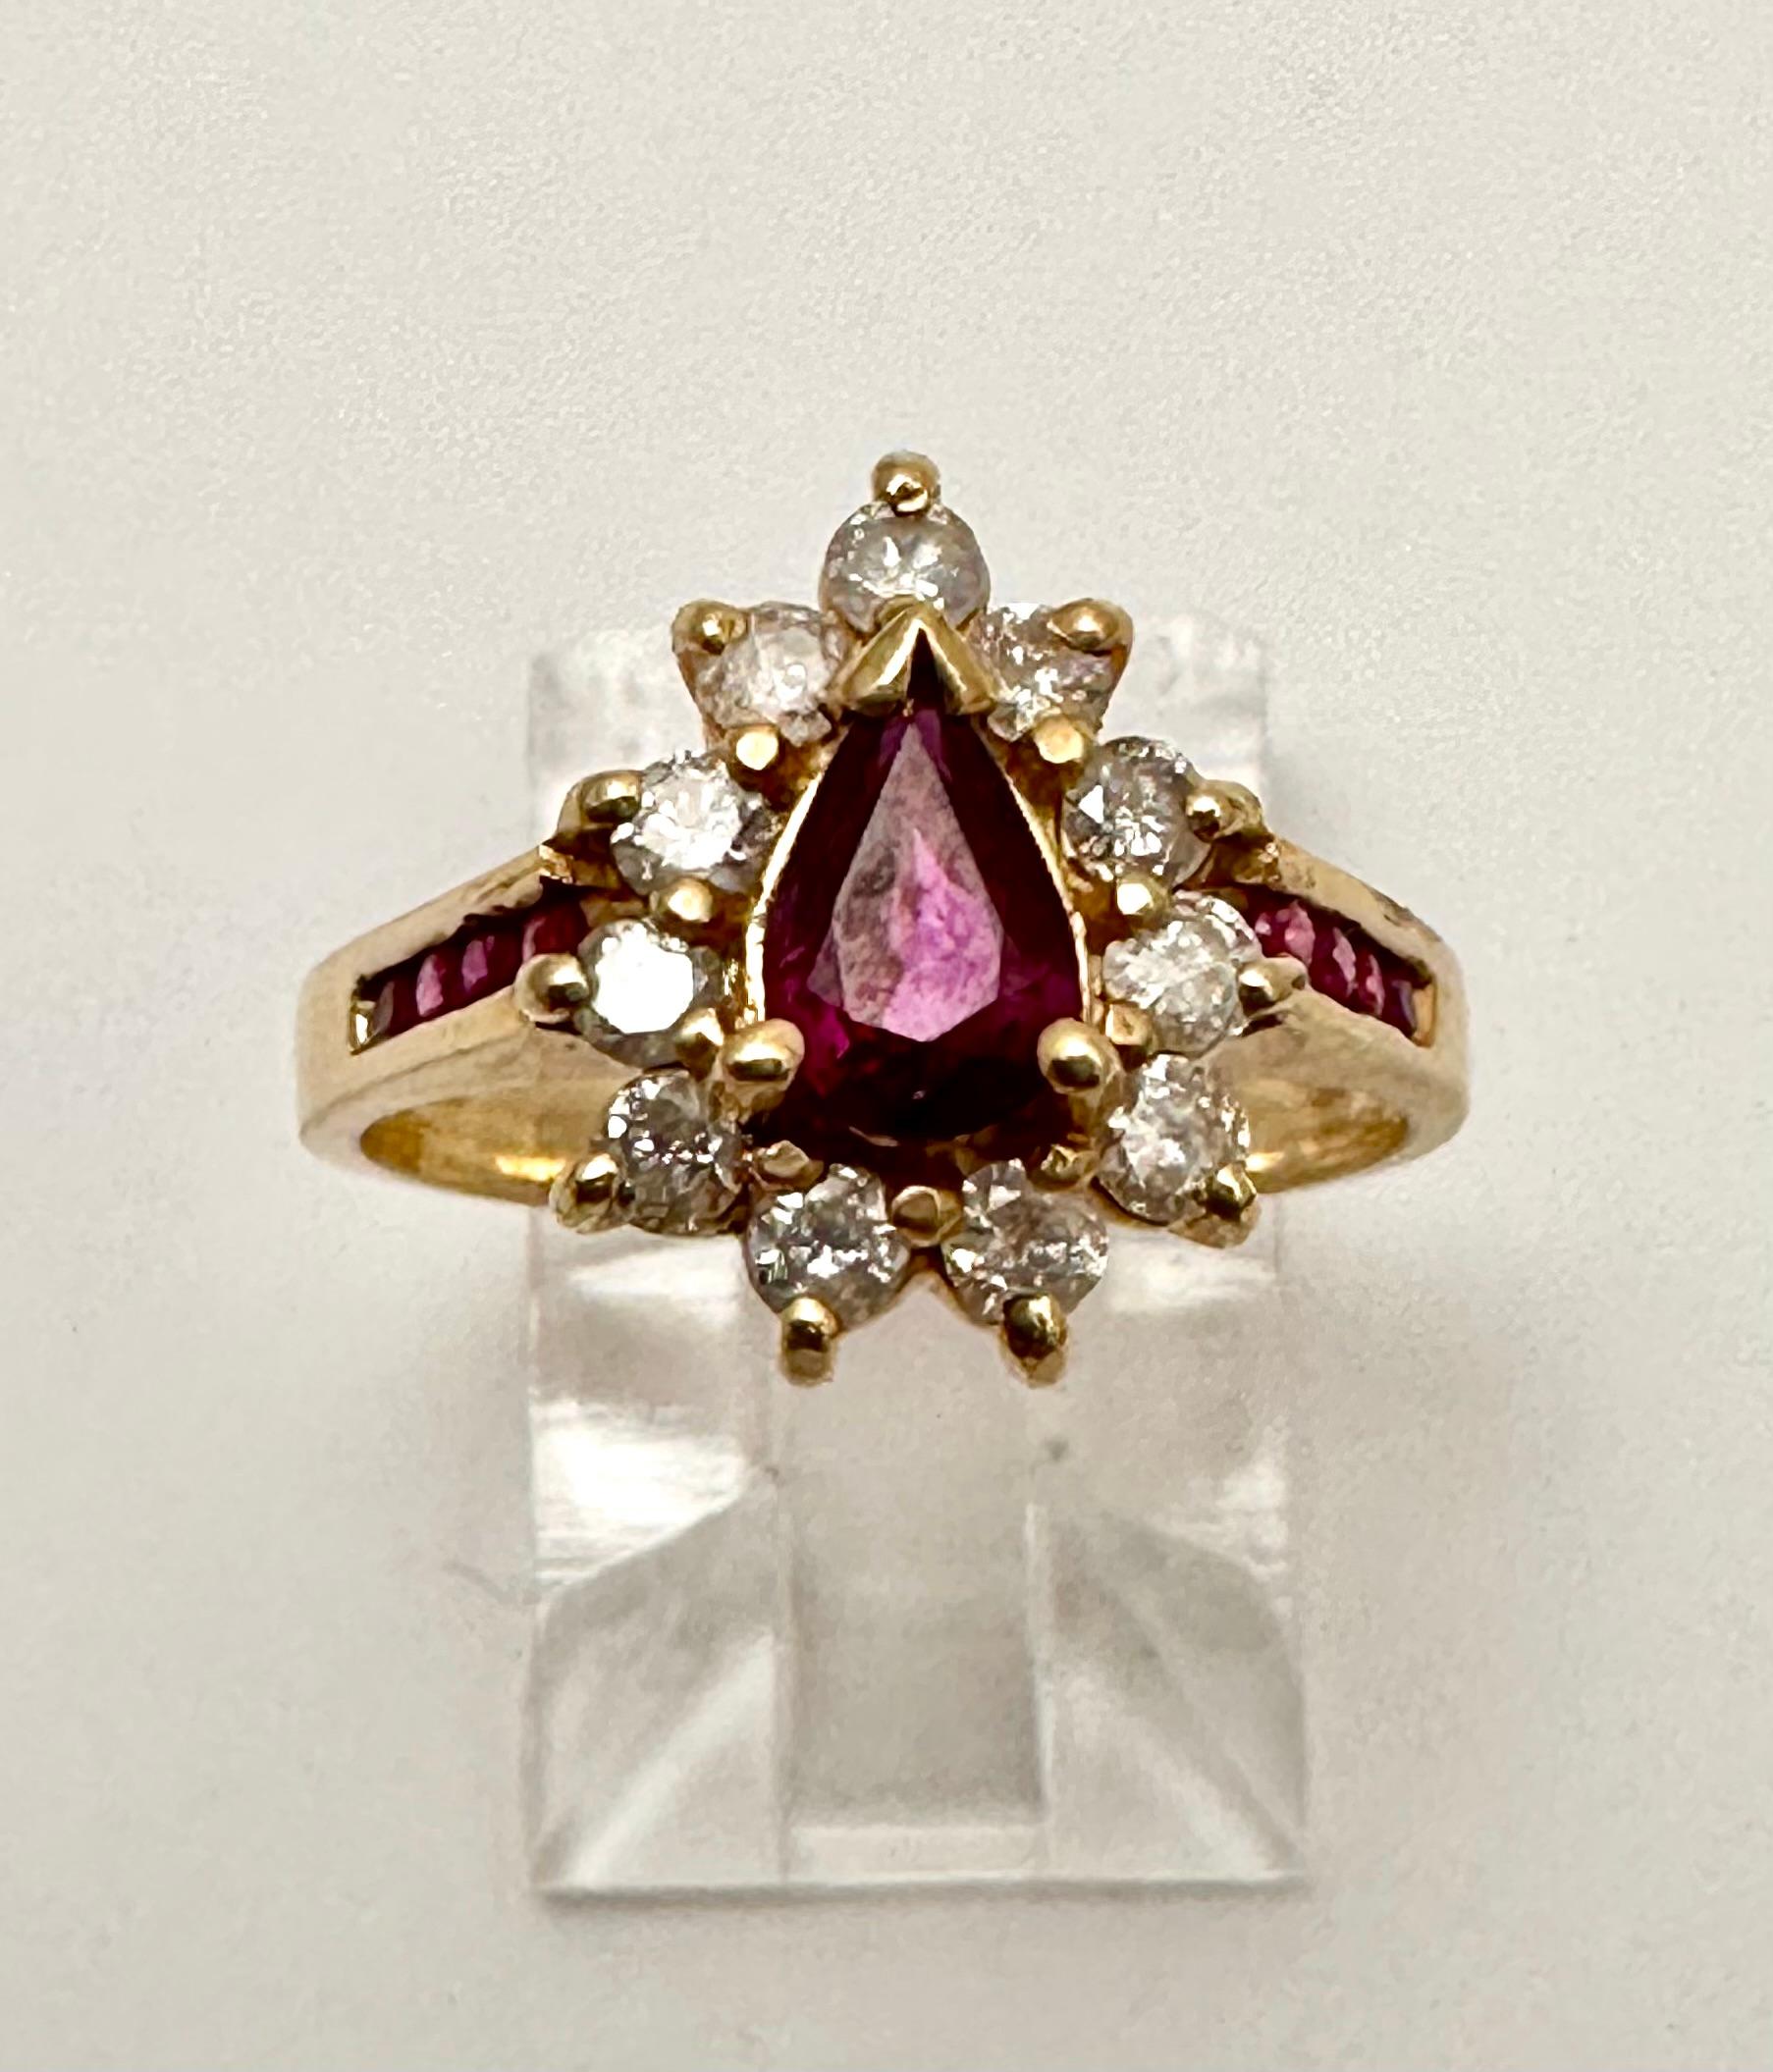 14k Yellow Gold 5mm x 7mm Pear Shape Ruby w/Surrounding Diamonds Ring Sz 6 1/2 For Sale 2